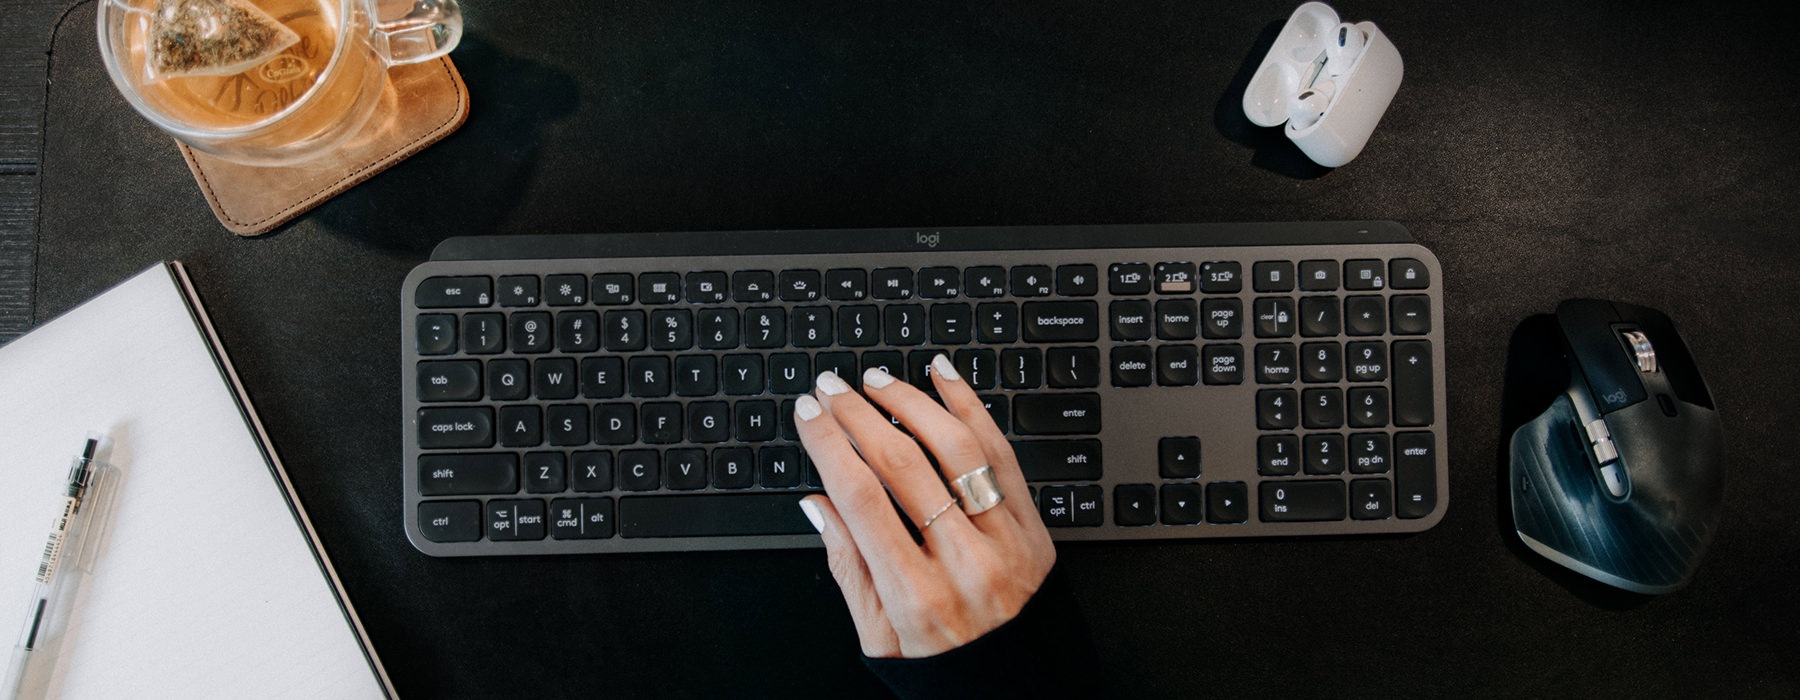 hand on keyboard with coffee